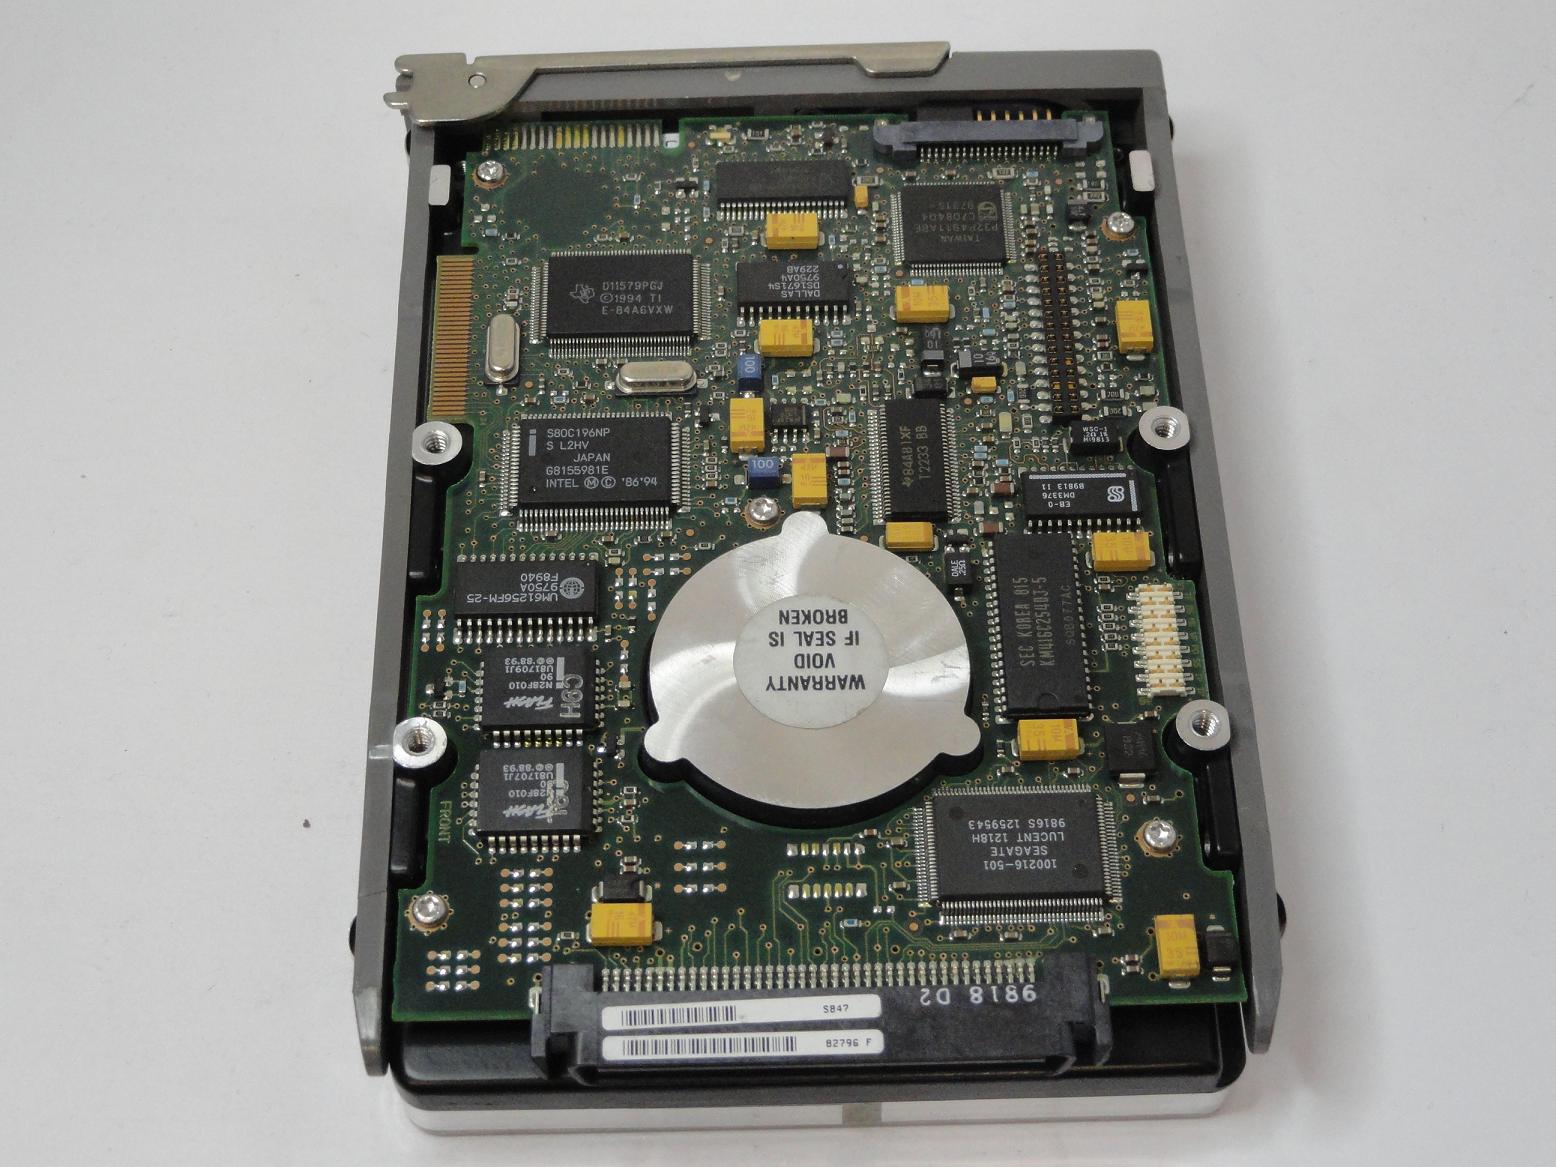 PR00322_9C6004-051_Seagate Sun 4.3GB SCSI 80 Pin 7200rpm 3.5in HDD - Image3